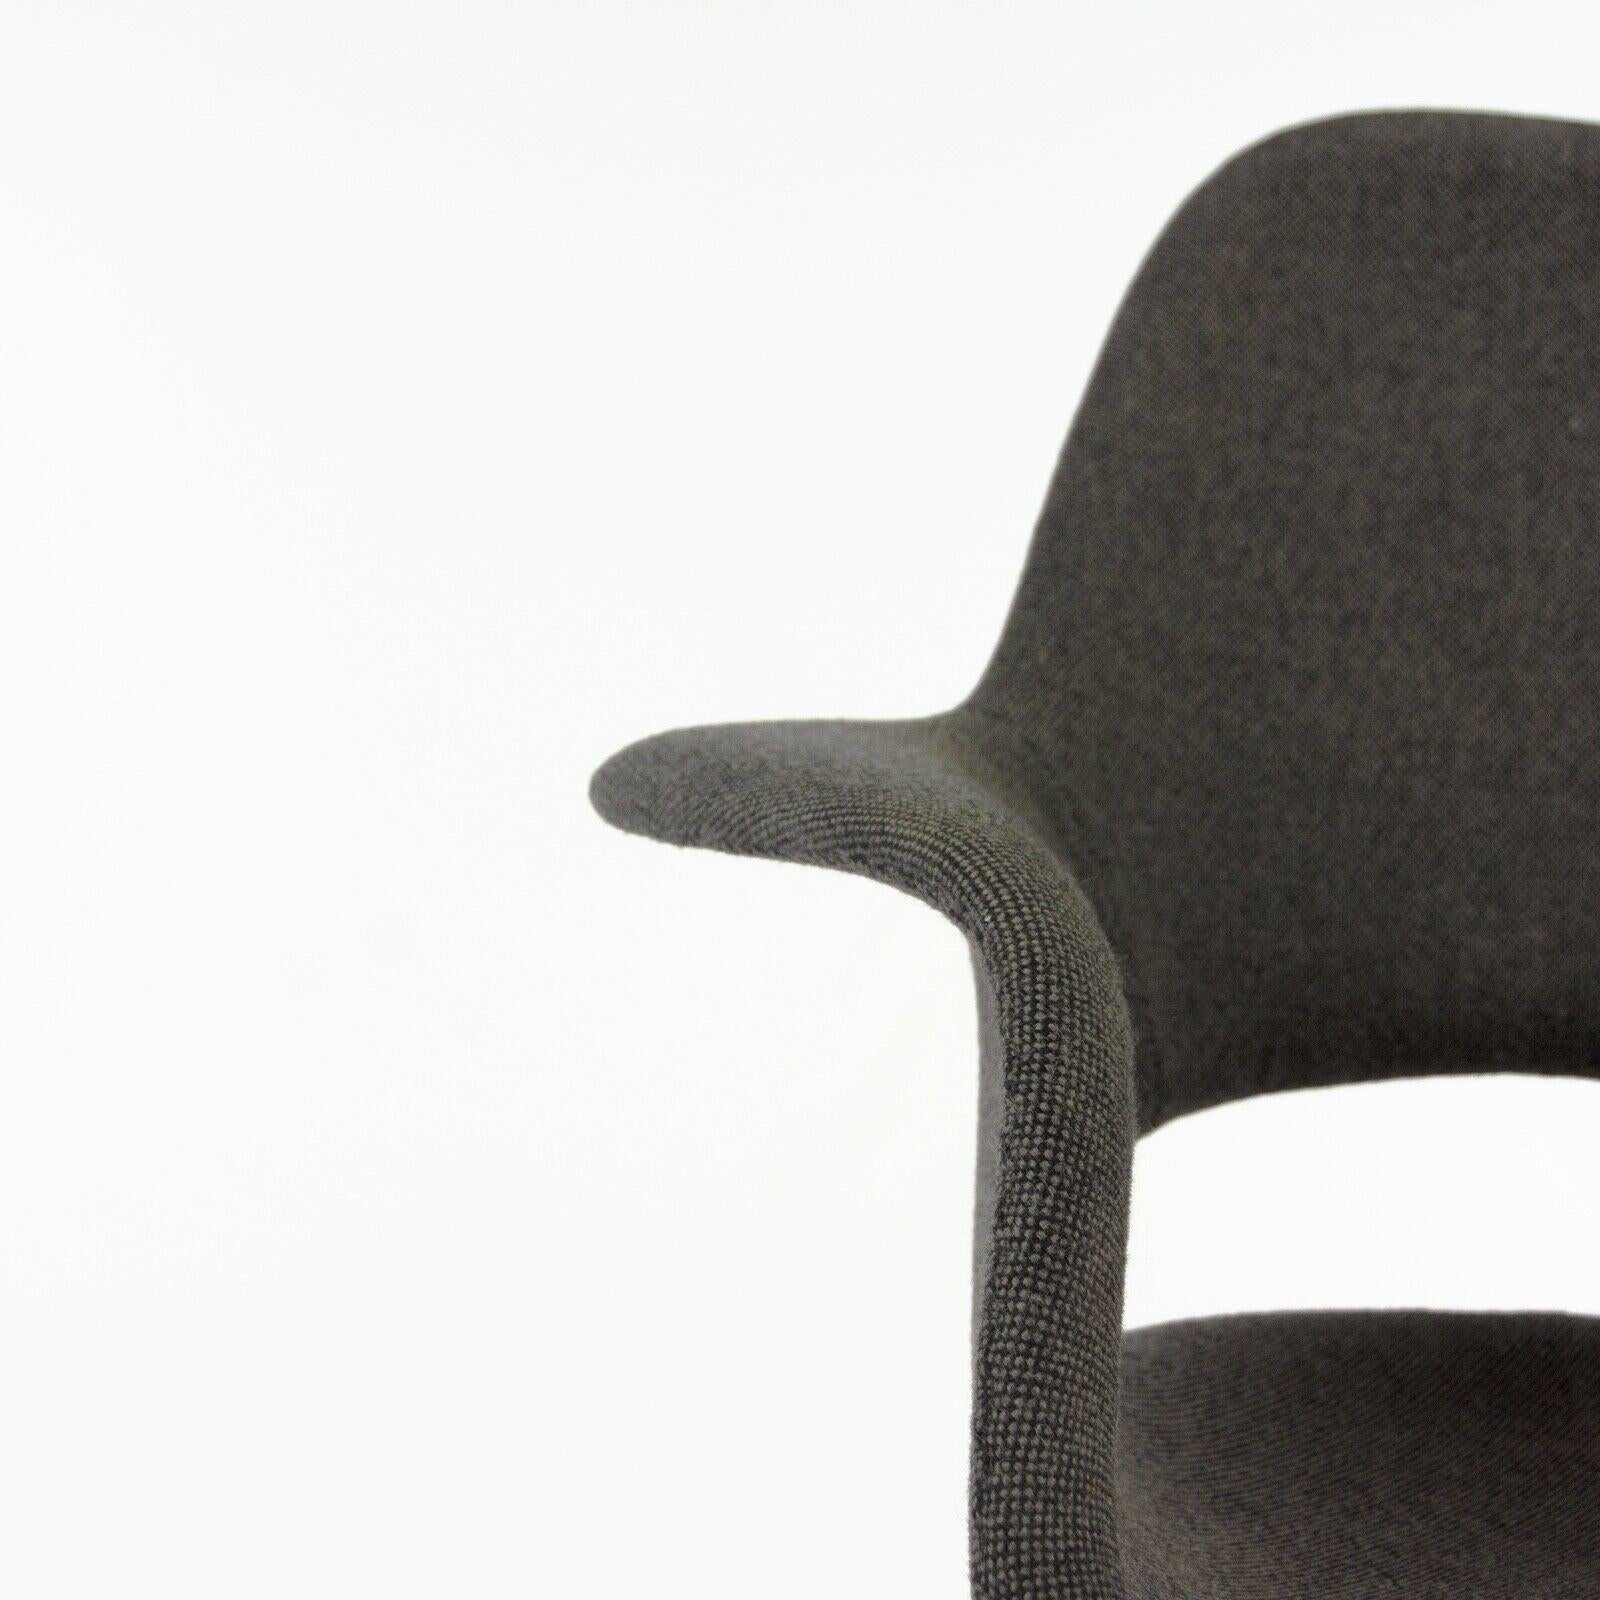 2010s Charles Eames & Eero Saarinen Organic Chairs by Vitra in Dark Gray Fabric For Sale 2